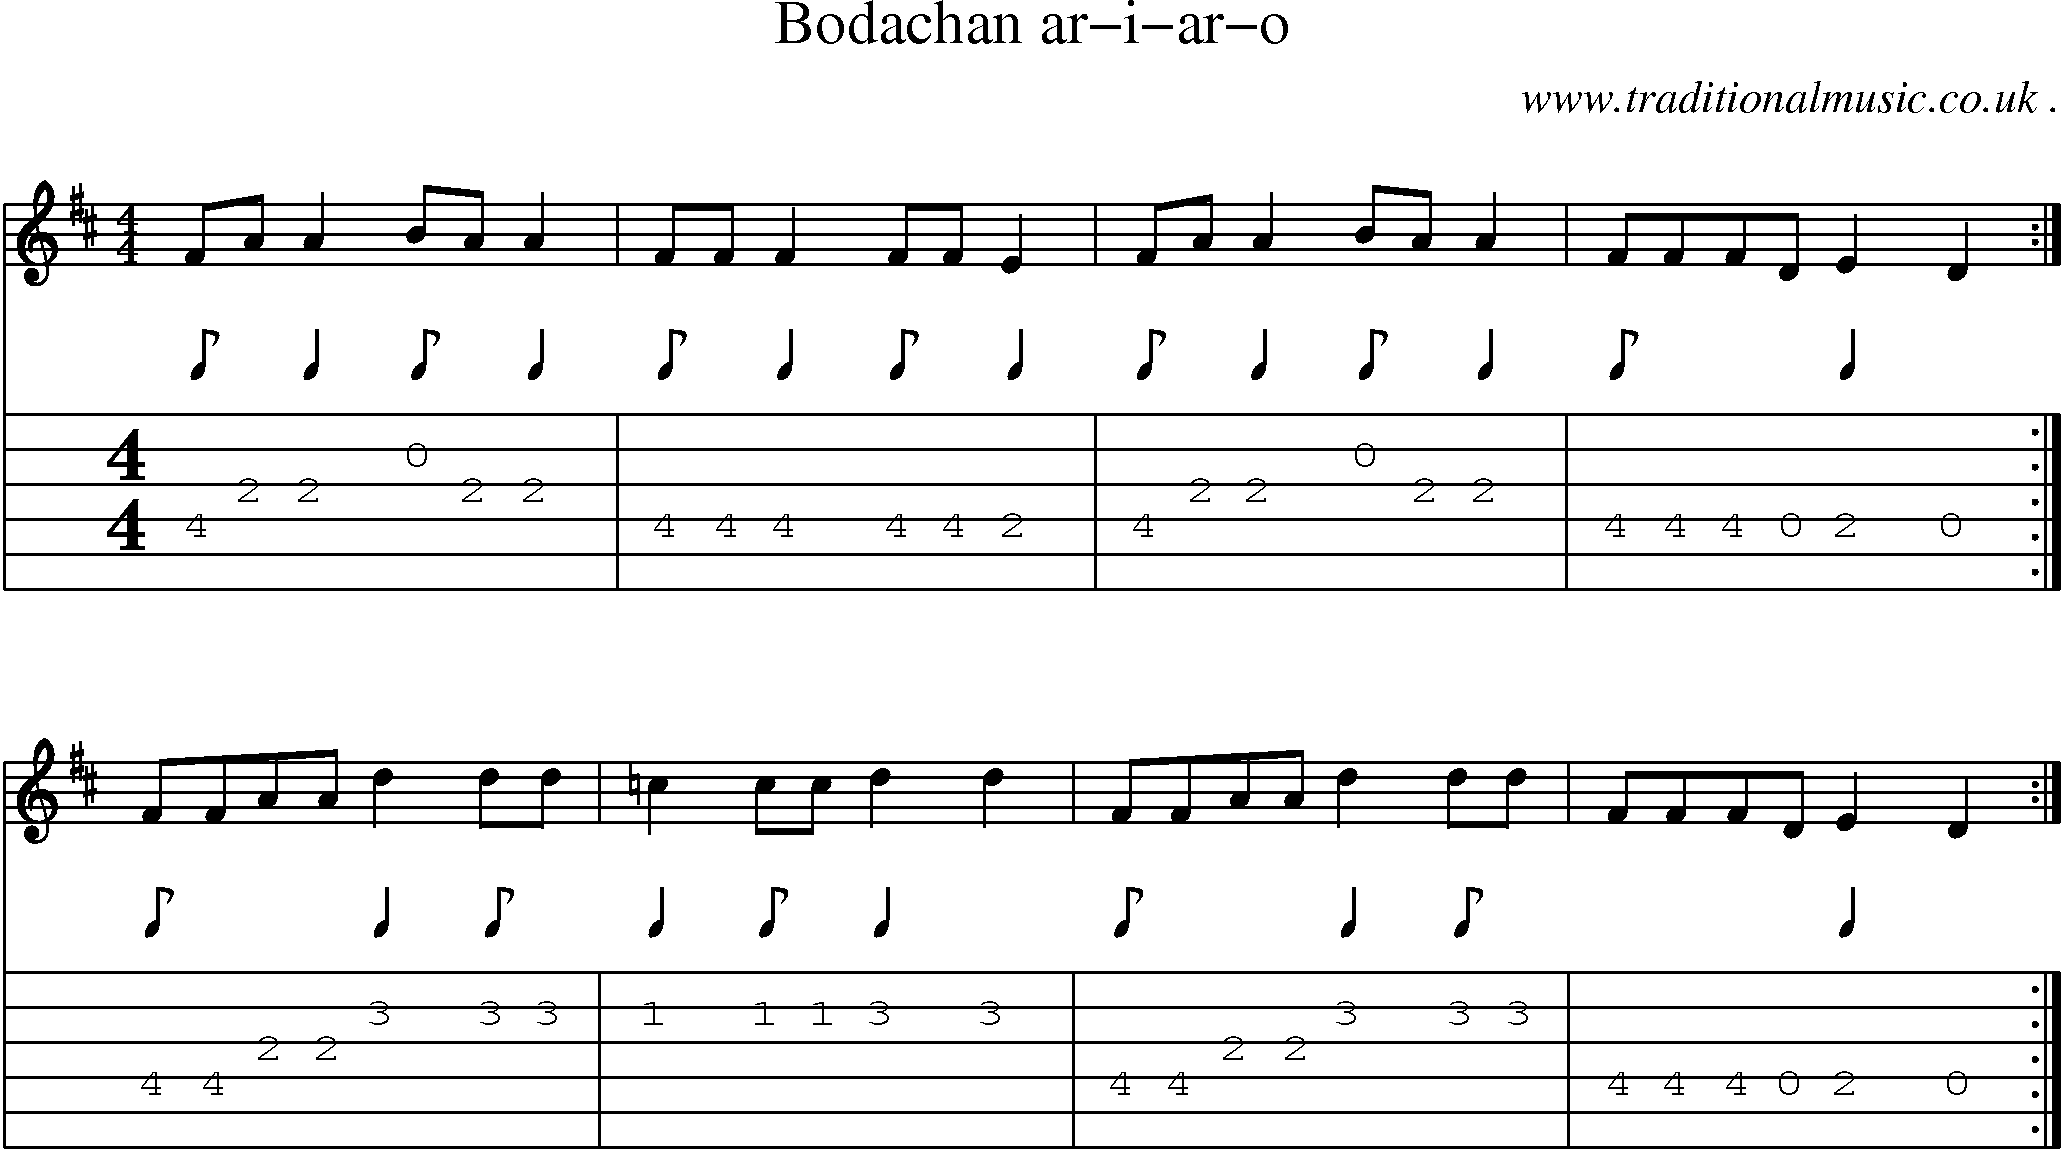 Sheet-music  score, Chords and Guitar Tabs for Bodachan Ar-i-ar-o